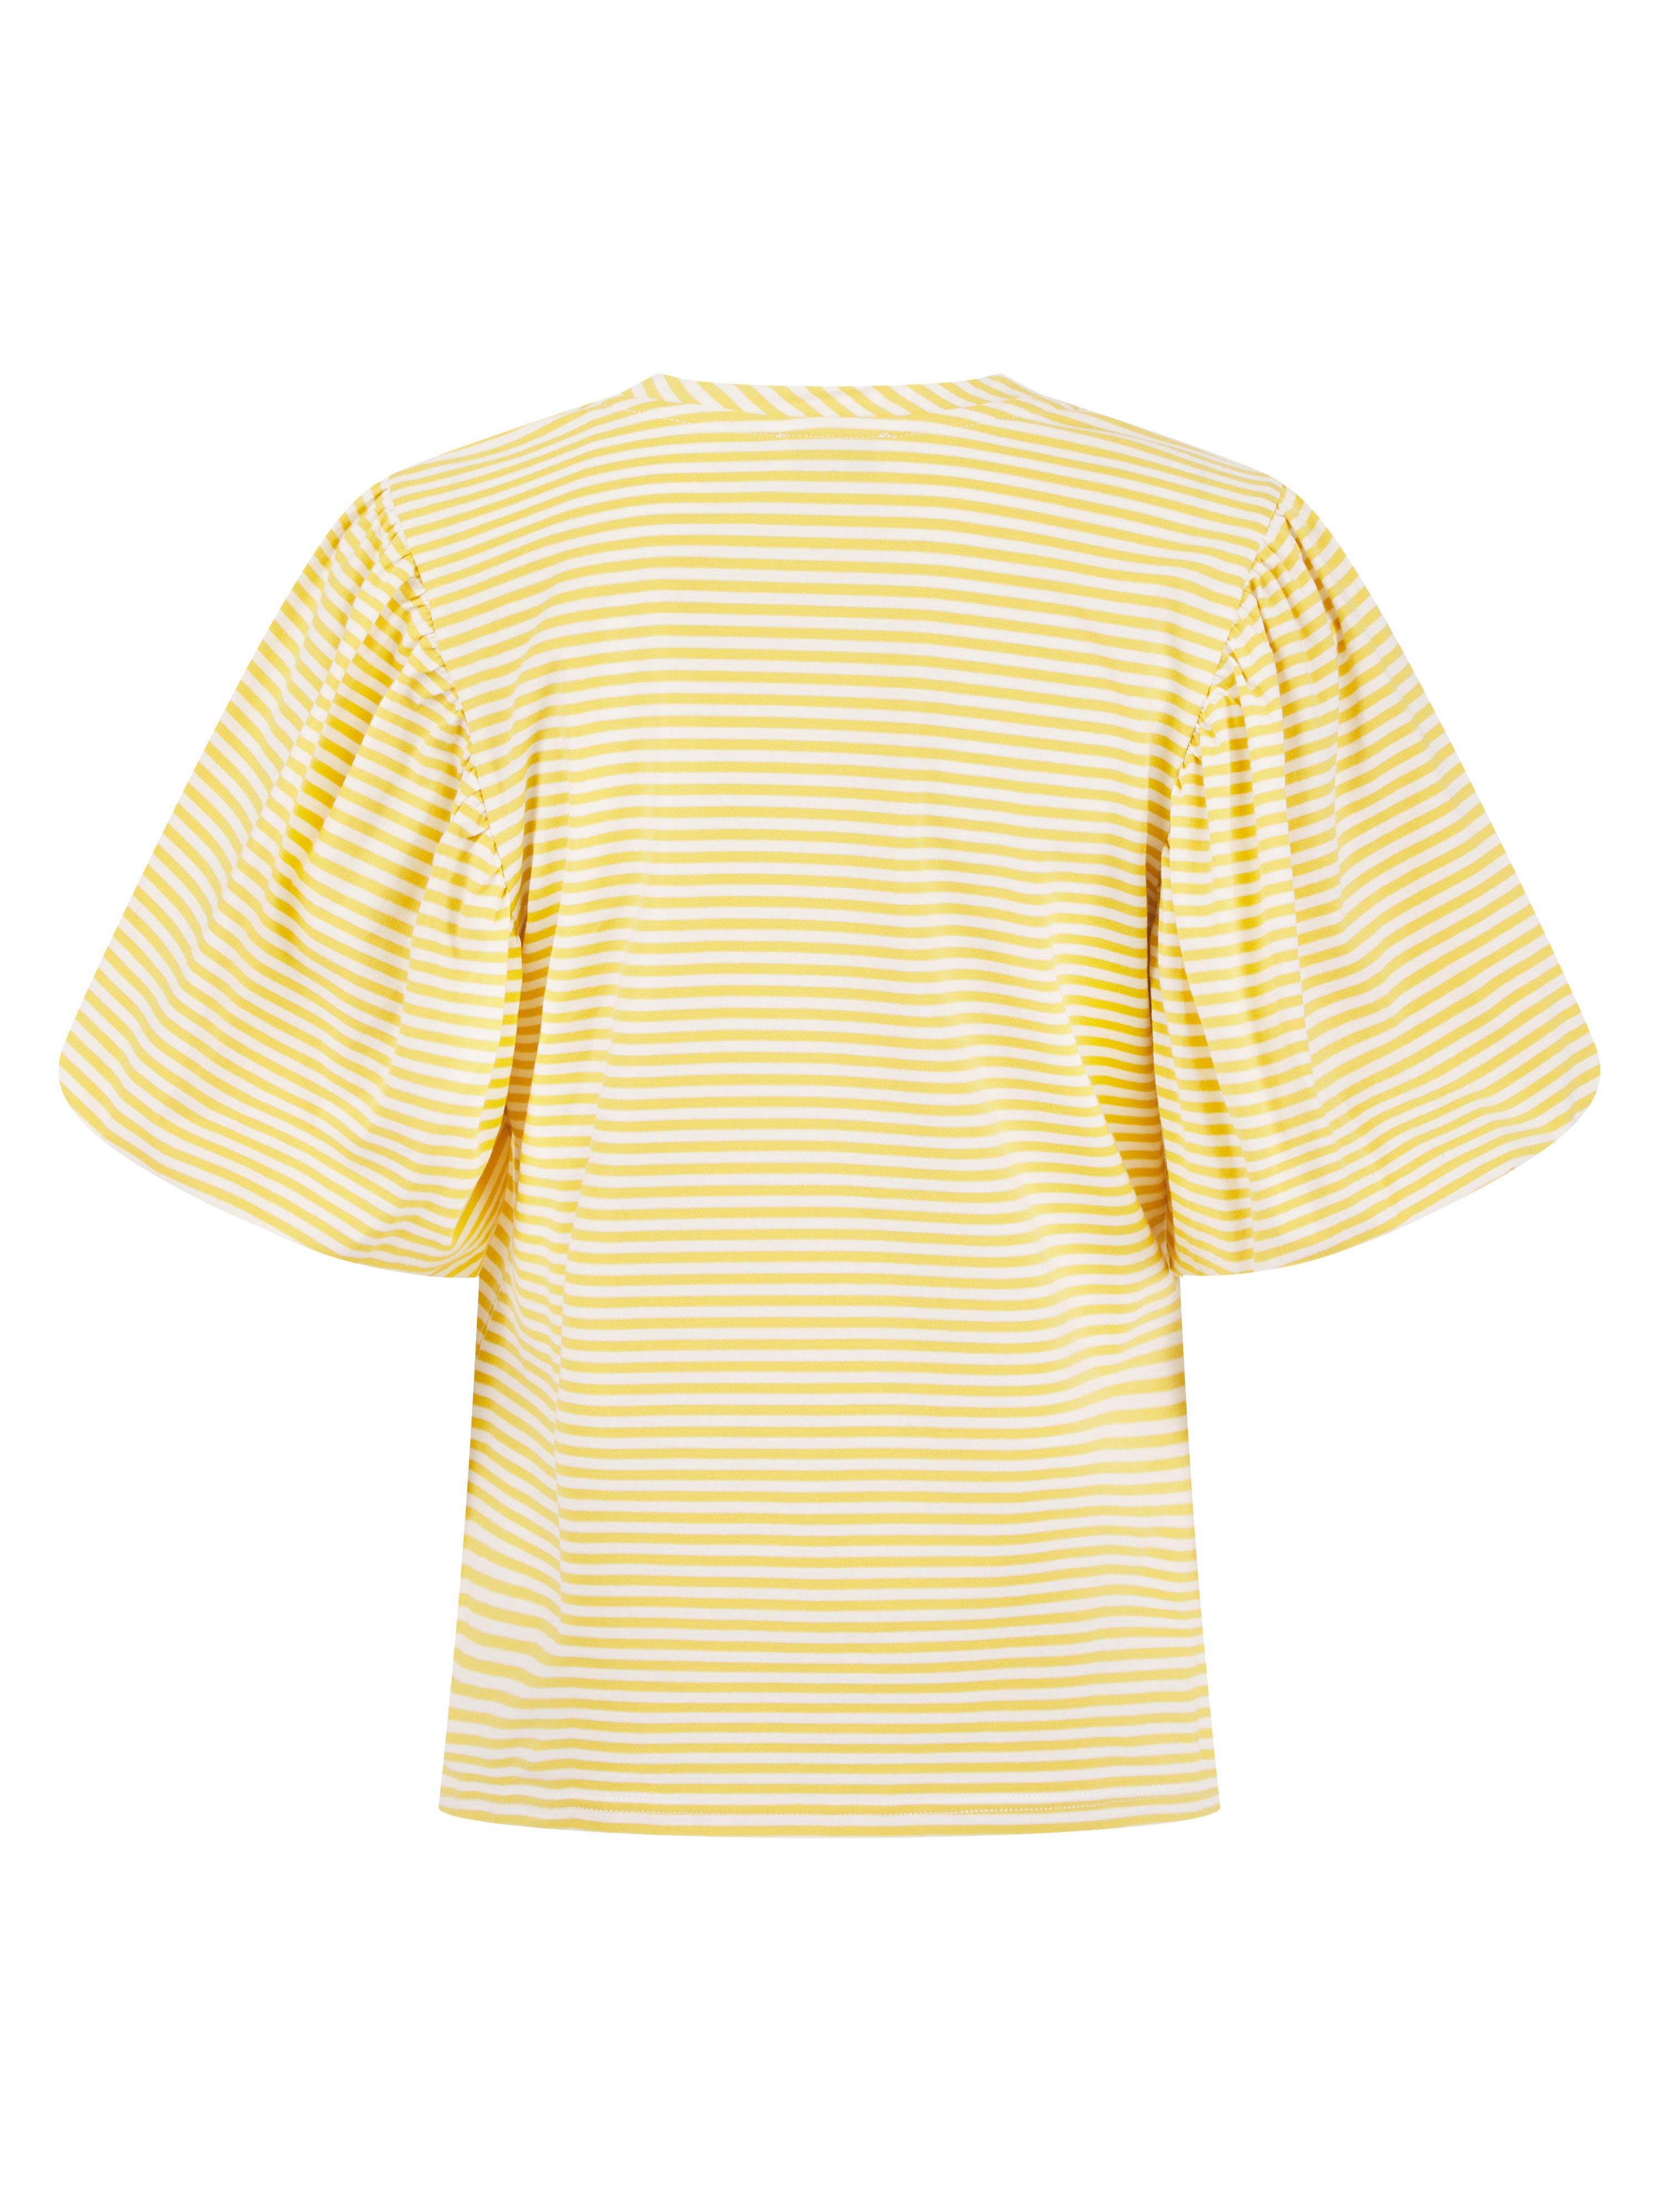 Rhea Top in Yellow and White Stripe